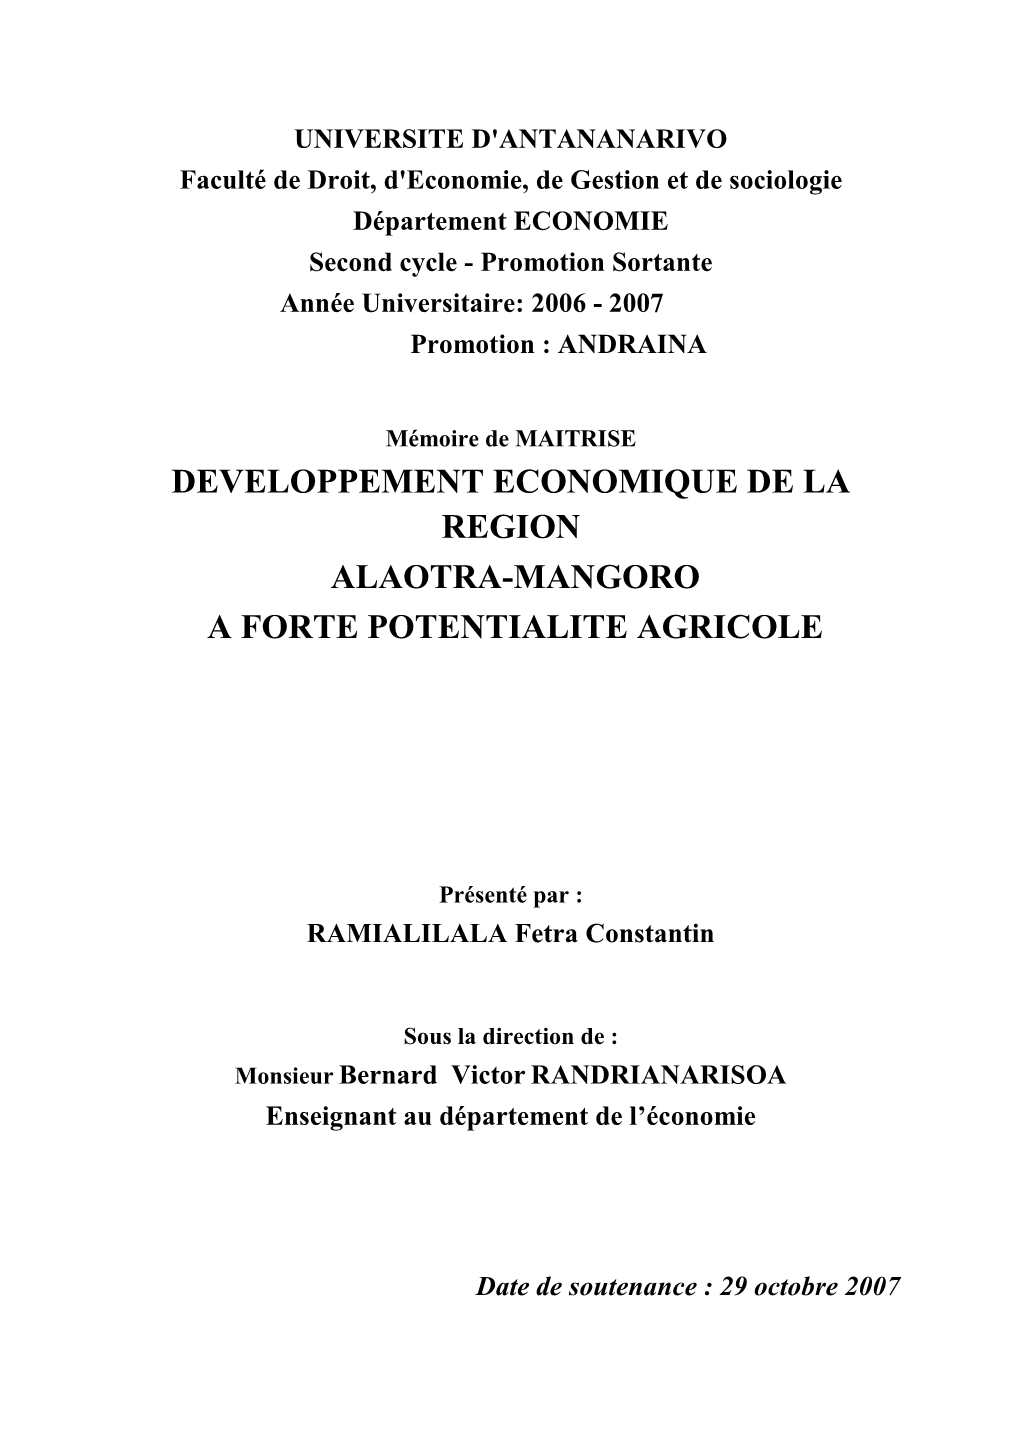 Developpement Economique De La Region Alaotra-Mangoro a Forte Potentialite Agricole